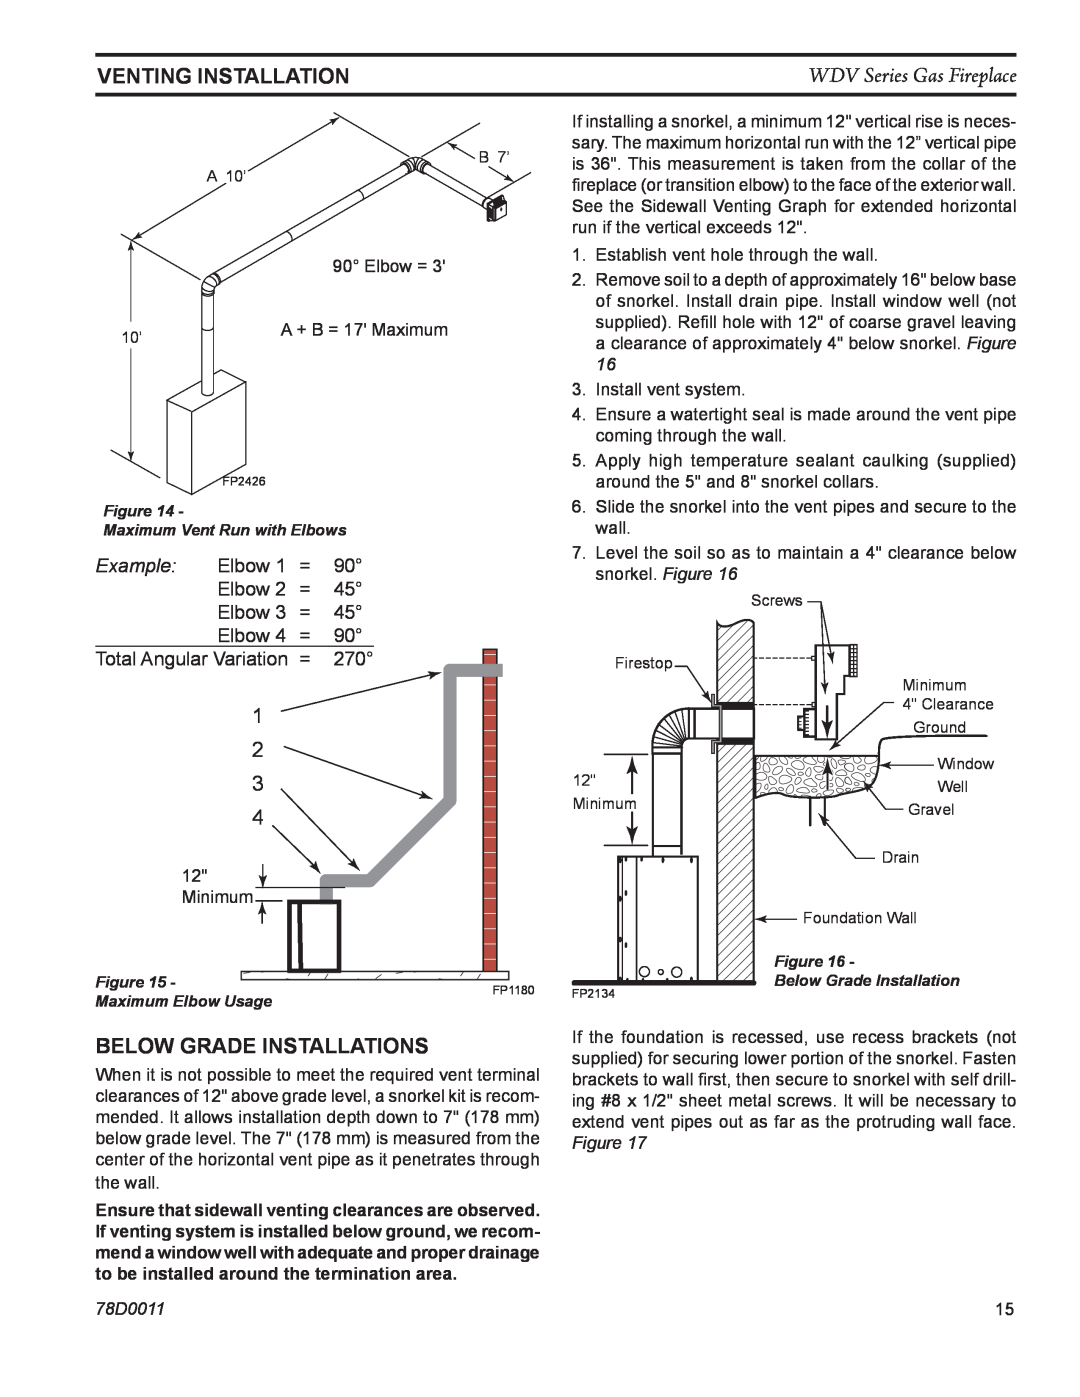 Monessen Hearth WDV500 manual Below Grade Installations, venting installation 